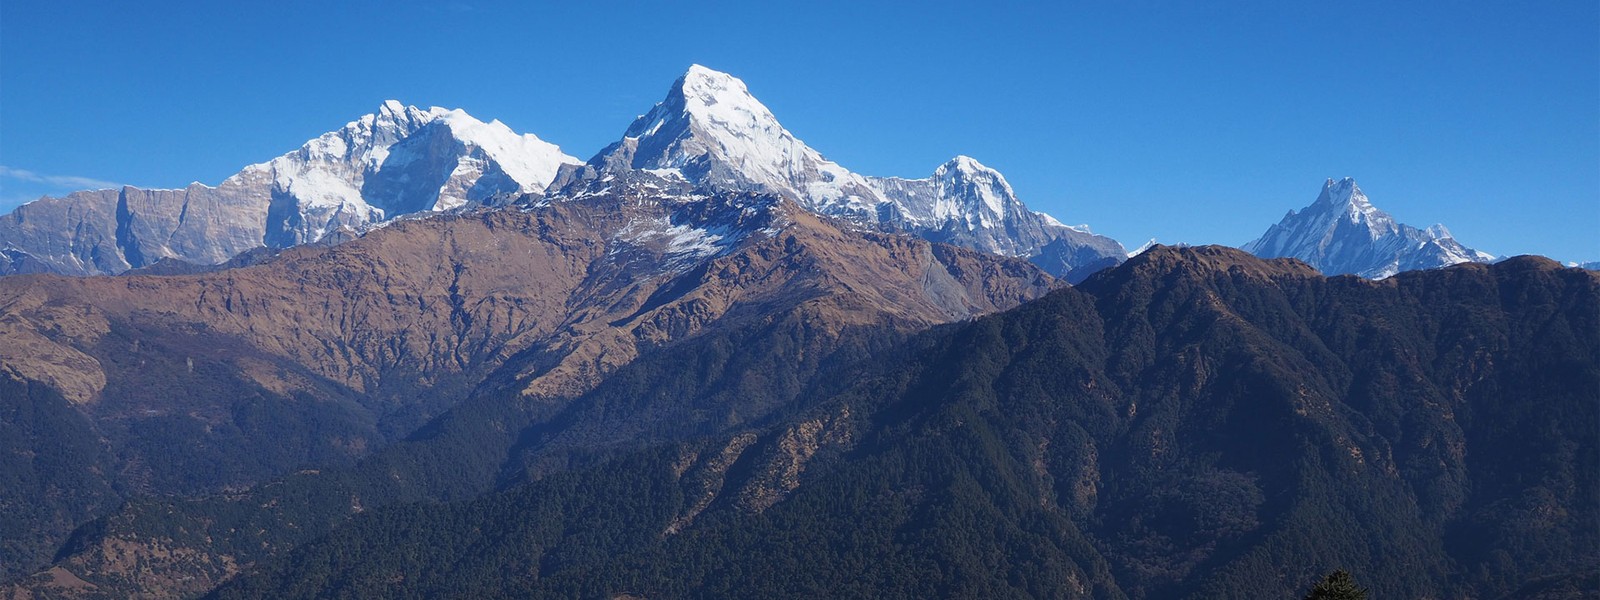 Ghorepani Poon Hill and Annapurna Base Camp Trekking